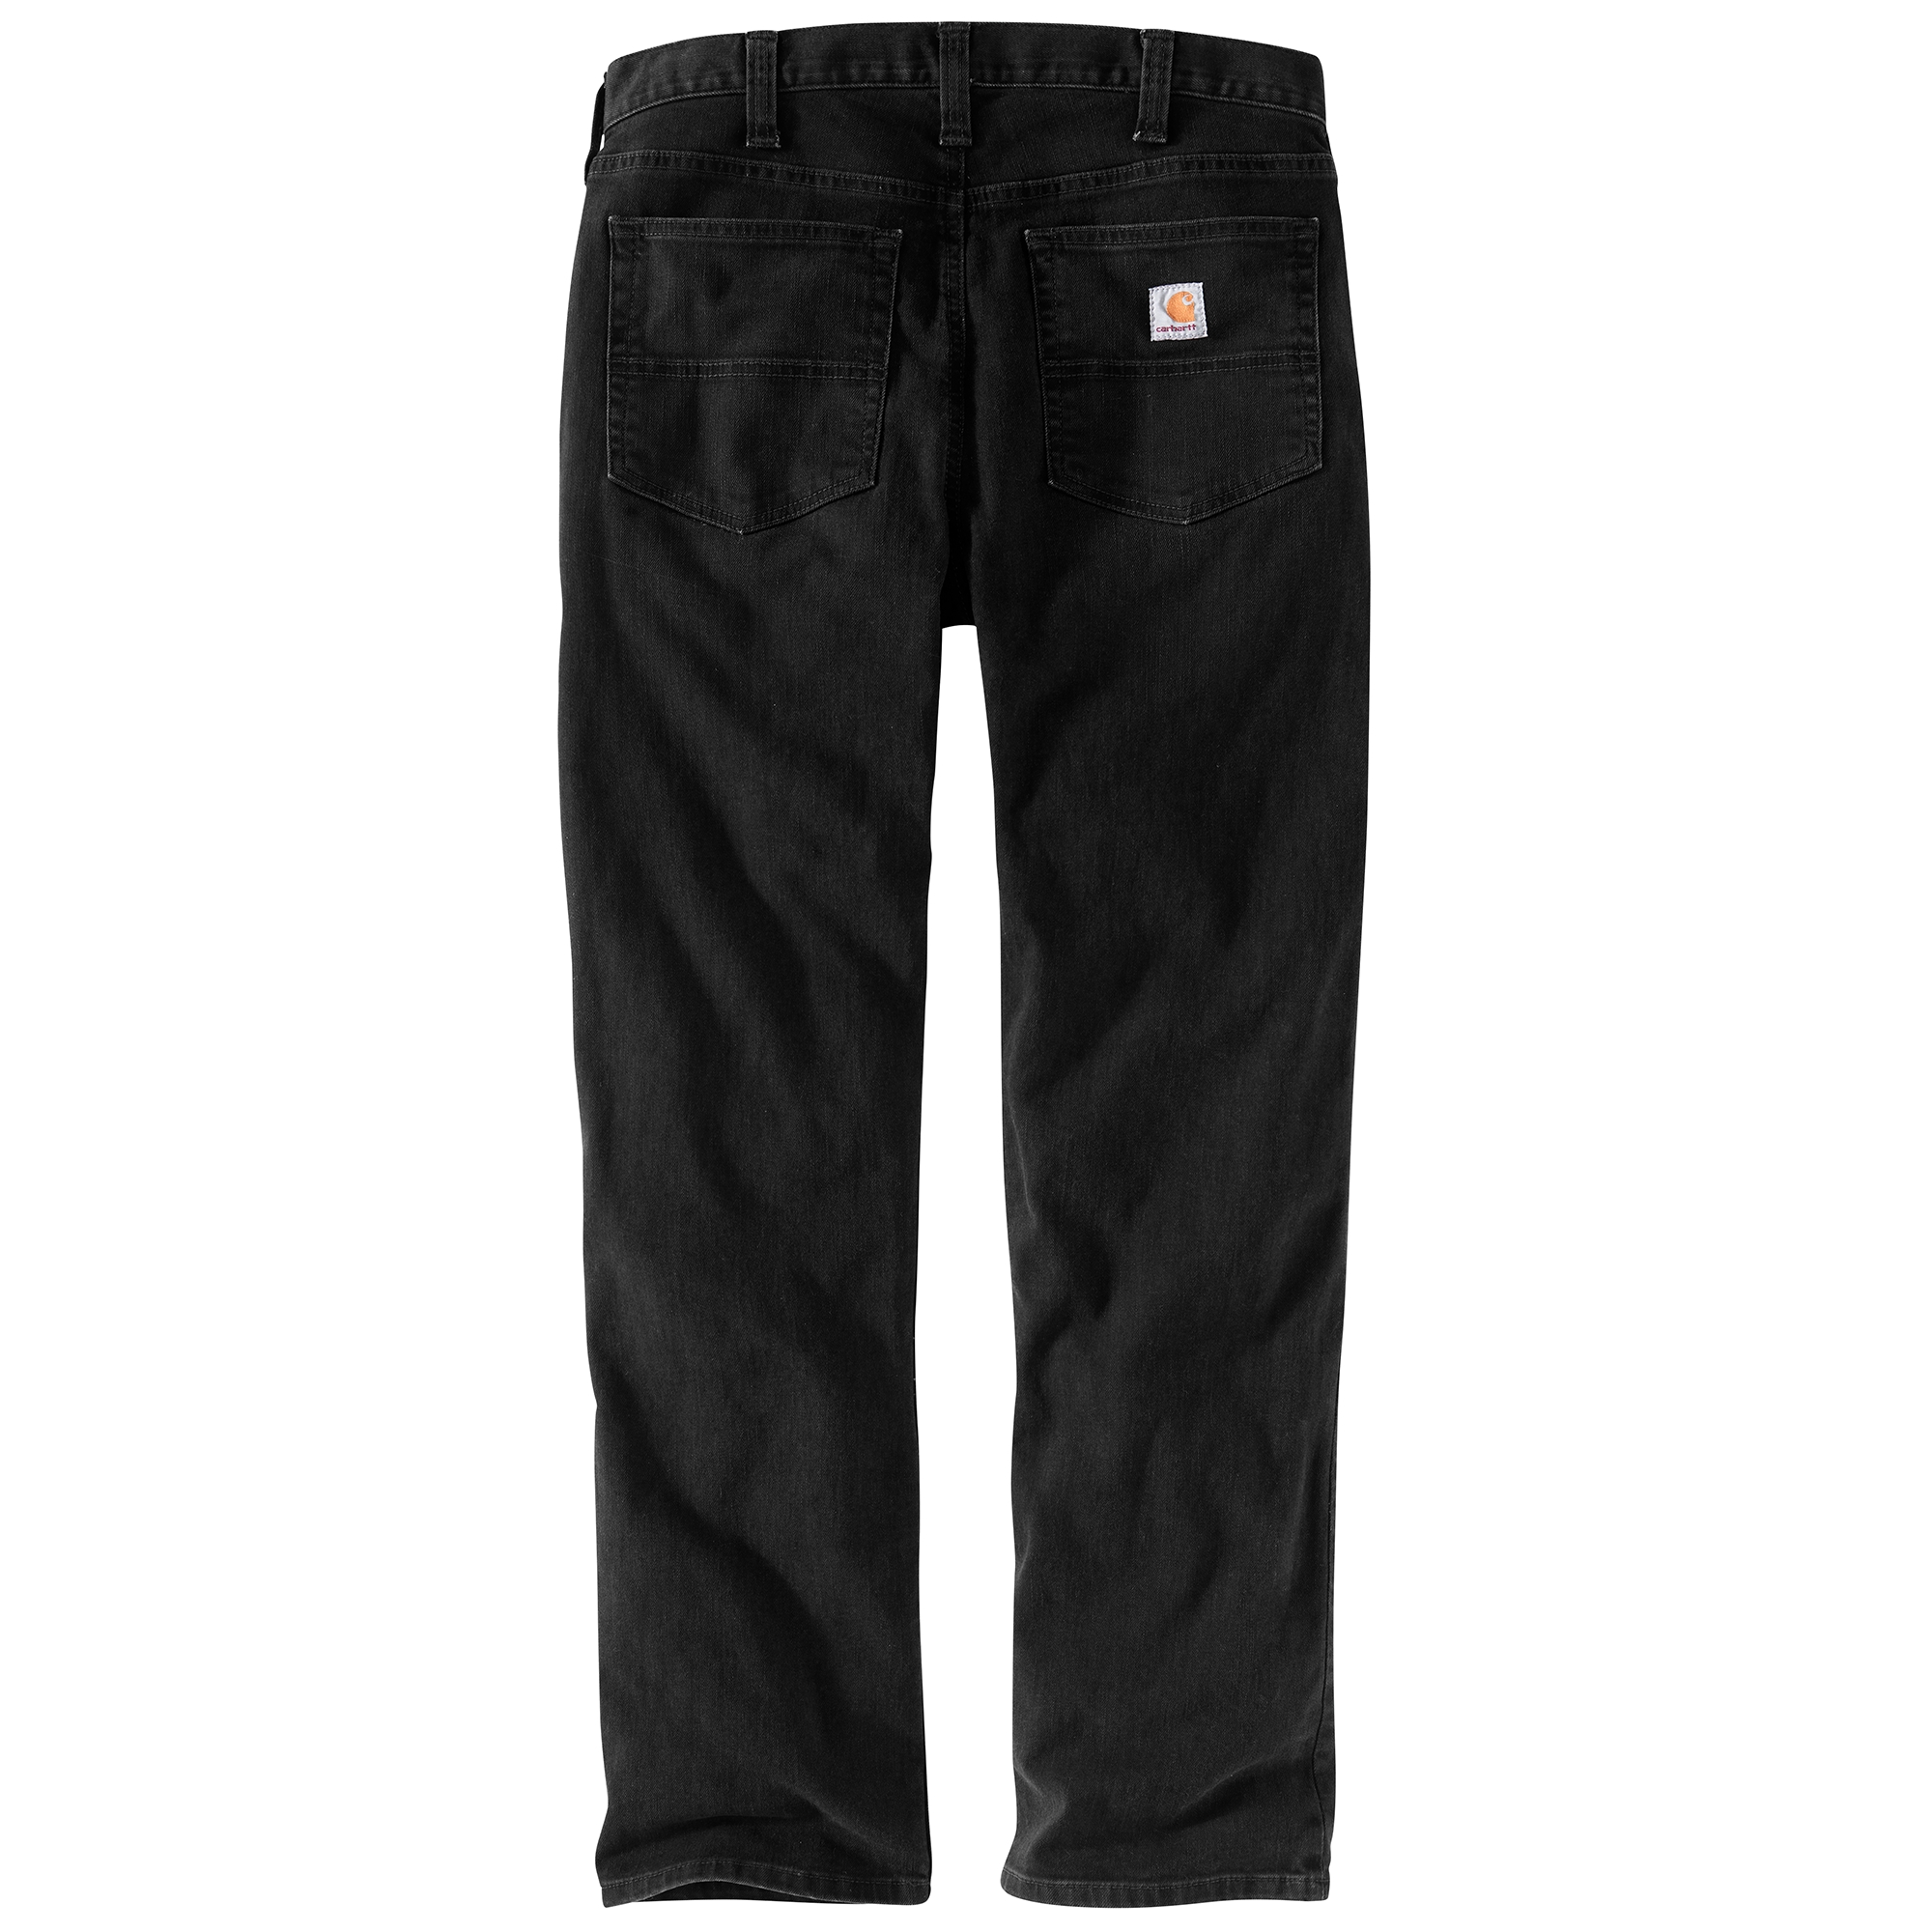 Carhartt Men's Rugged Flex Relaxed Fit Utility Five Pocket Jean